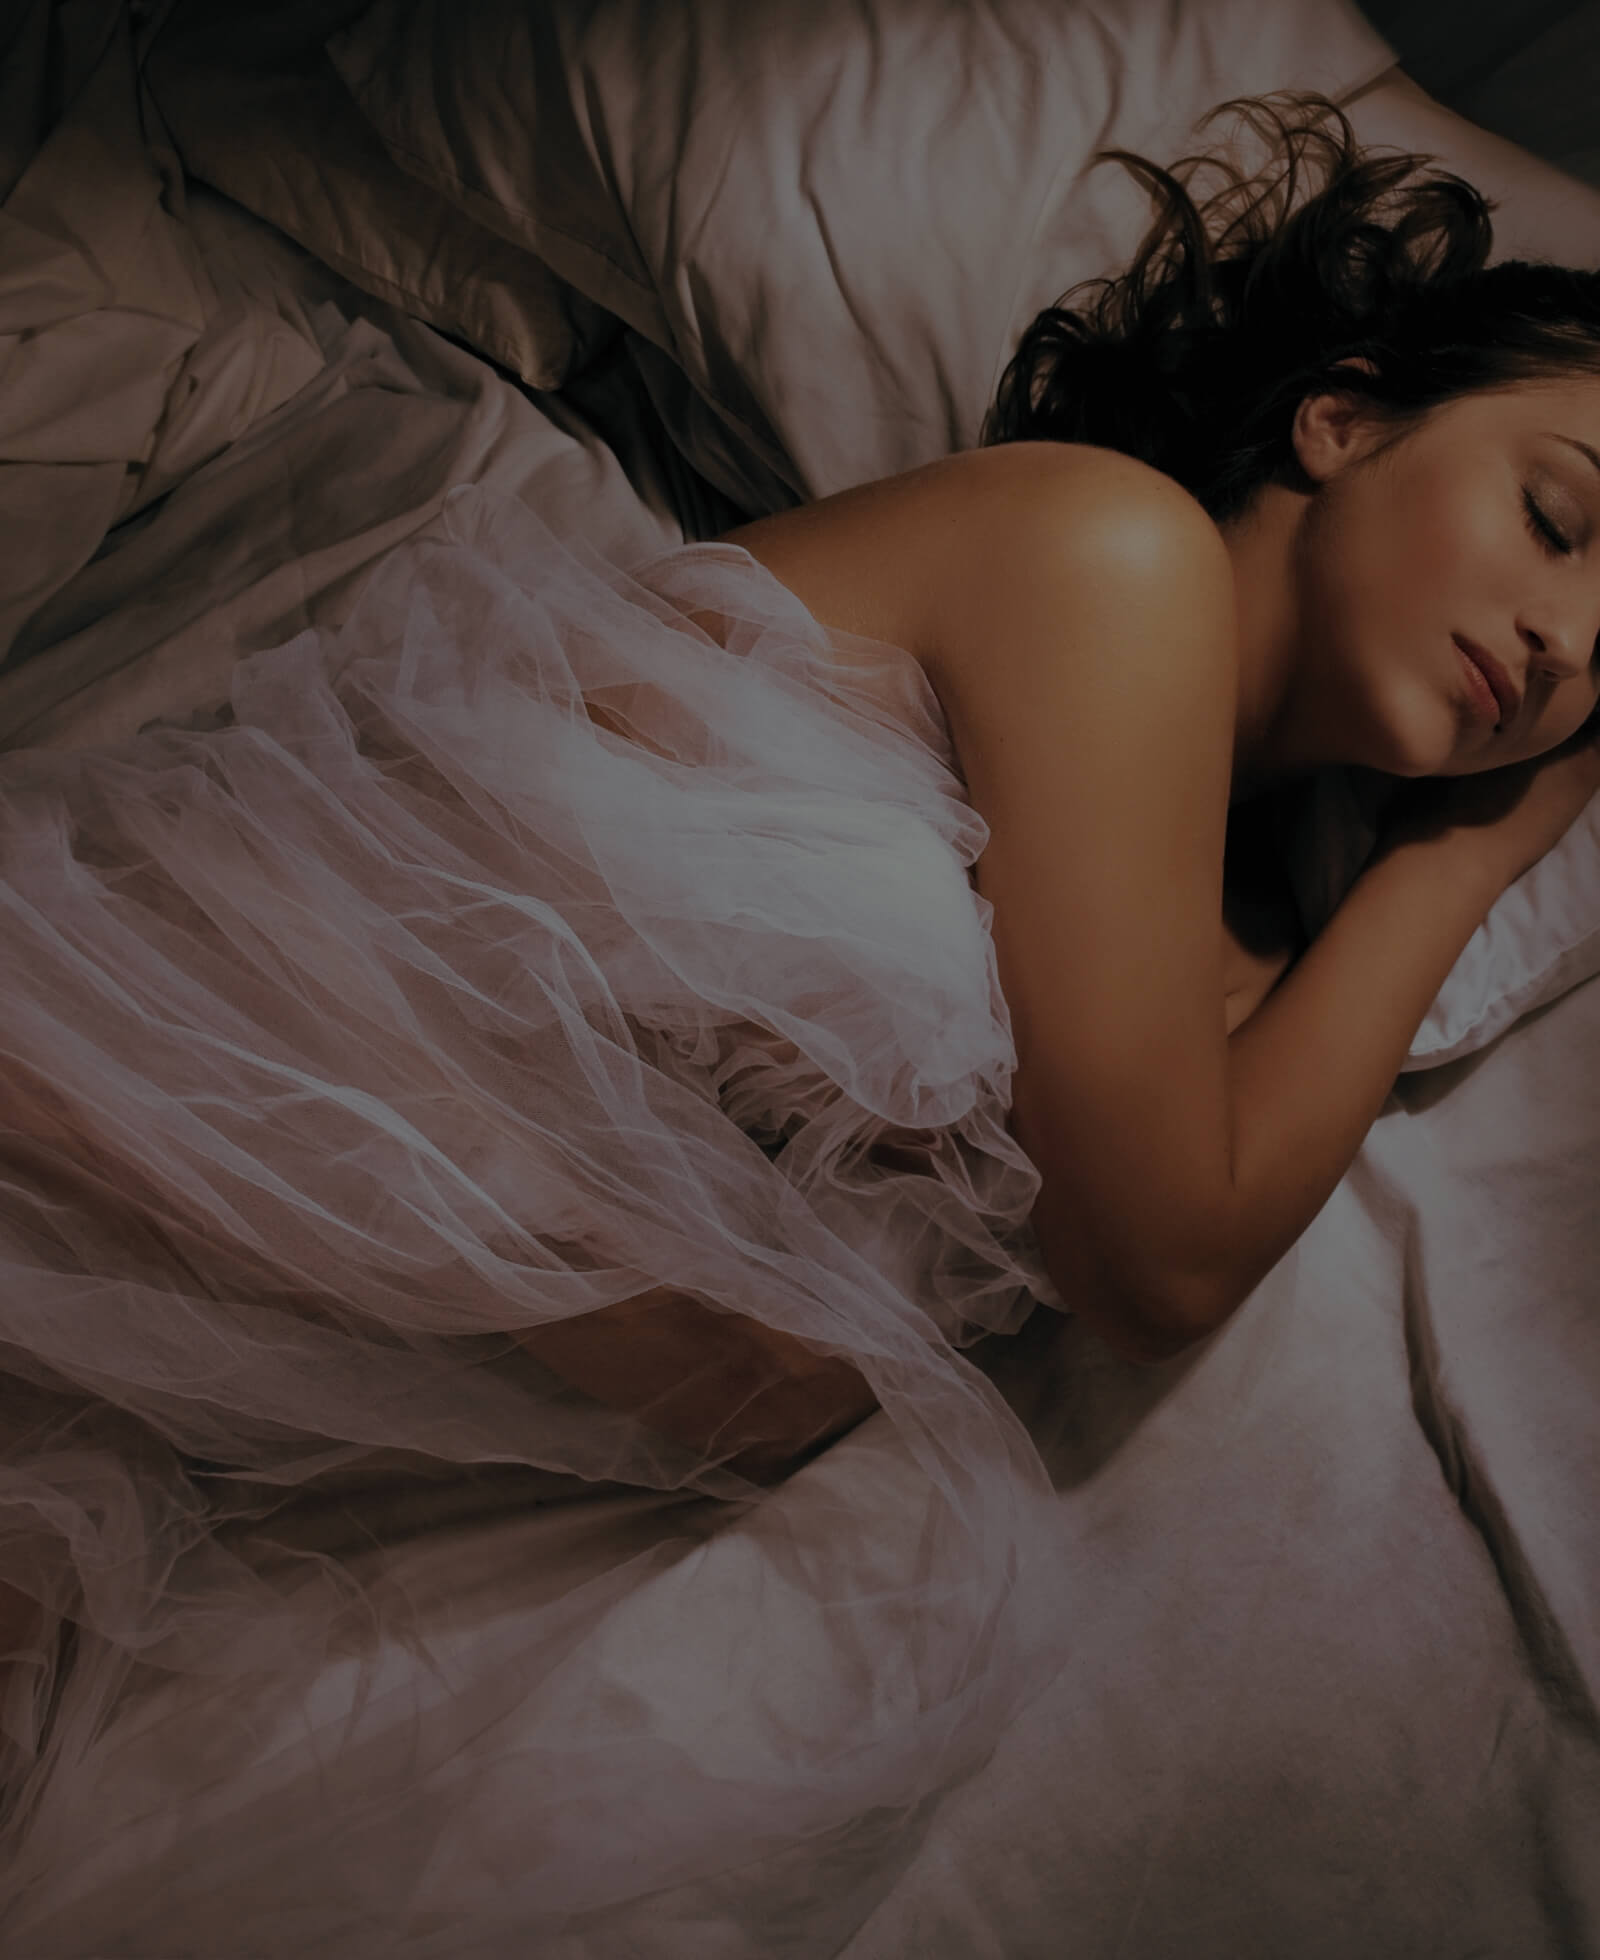 Anti-snoring treatment